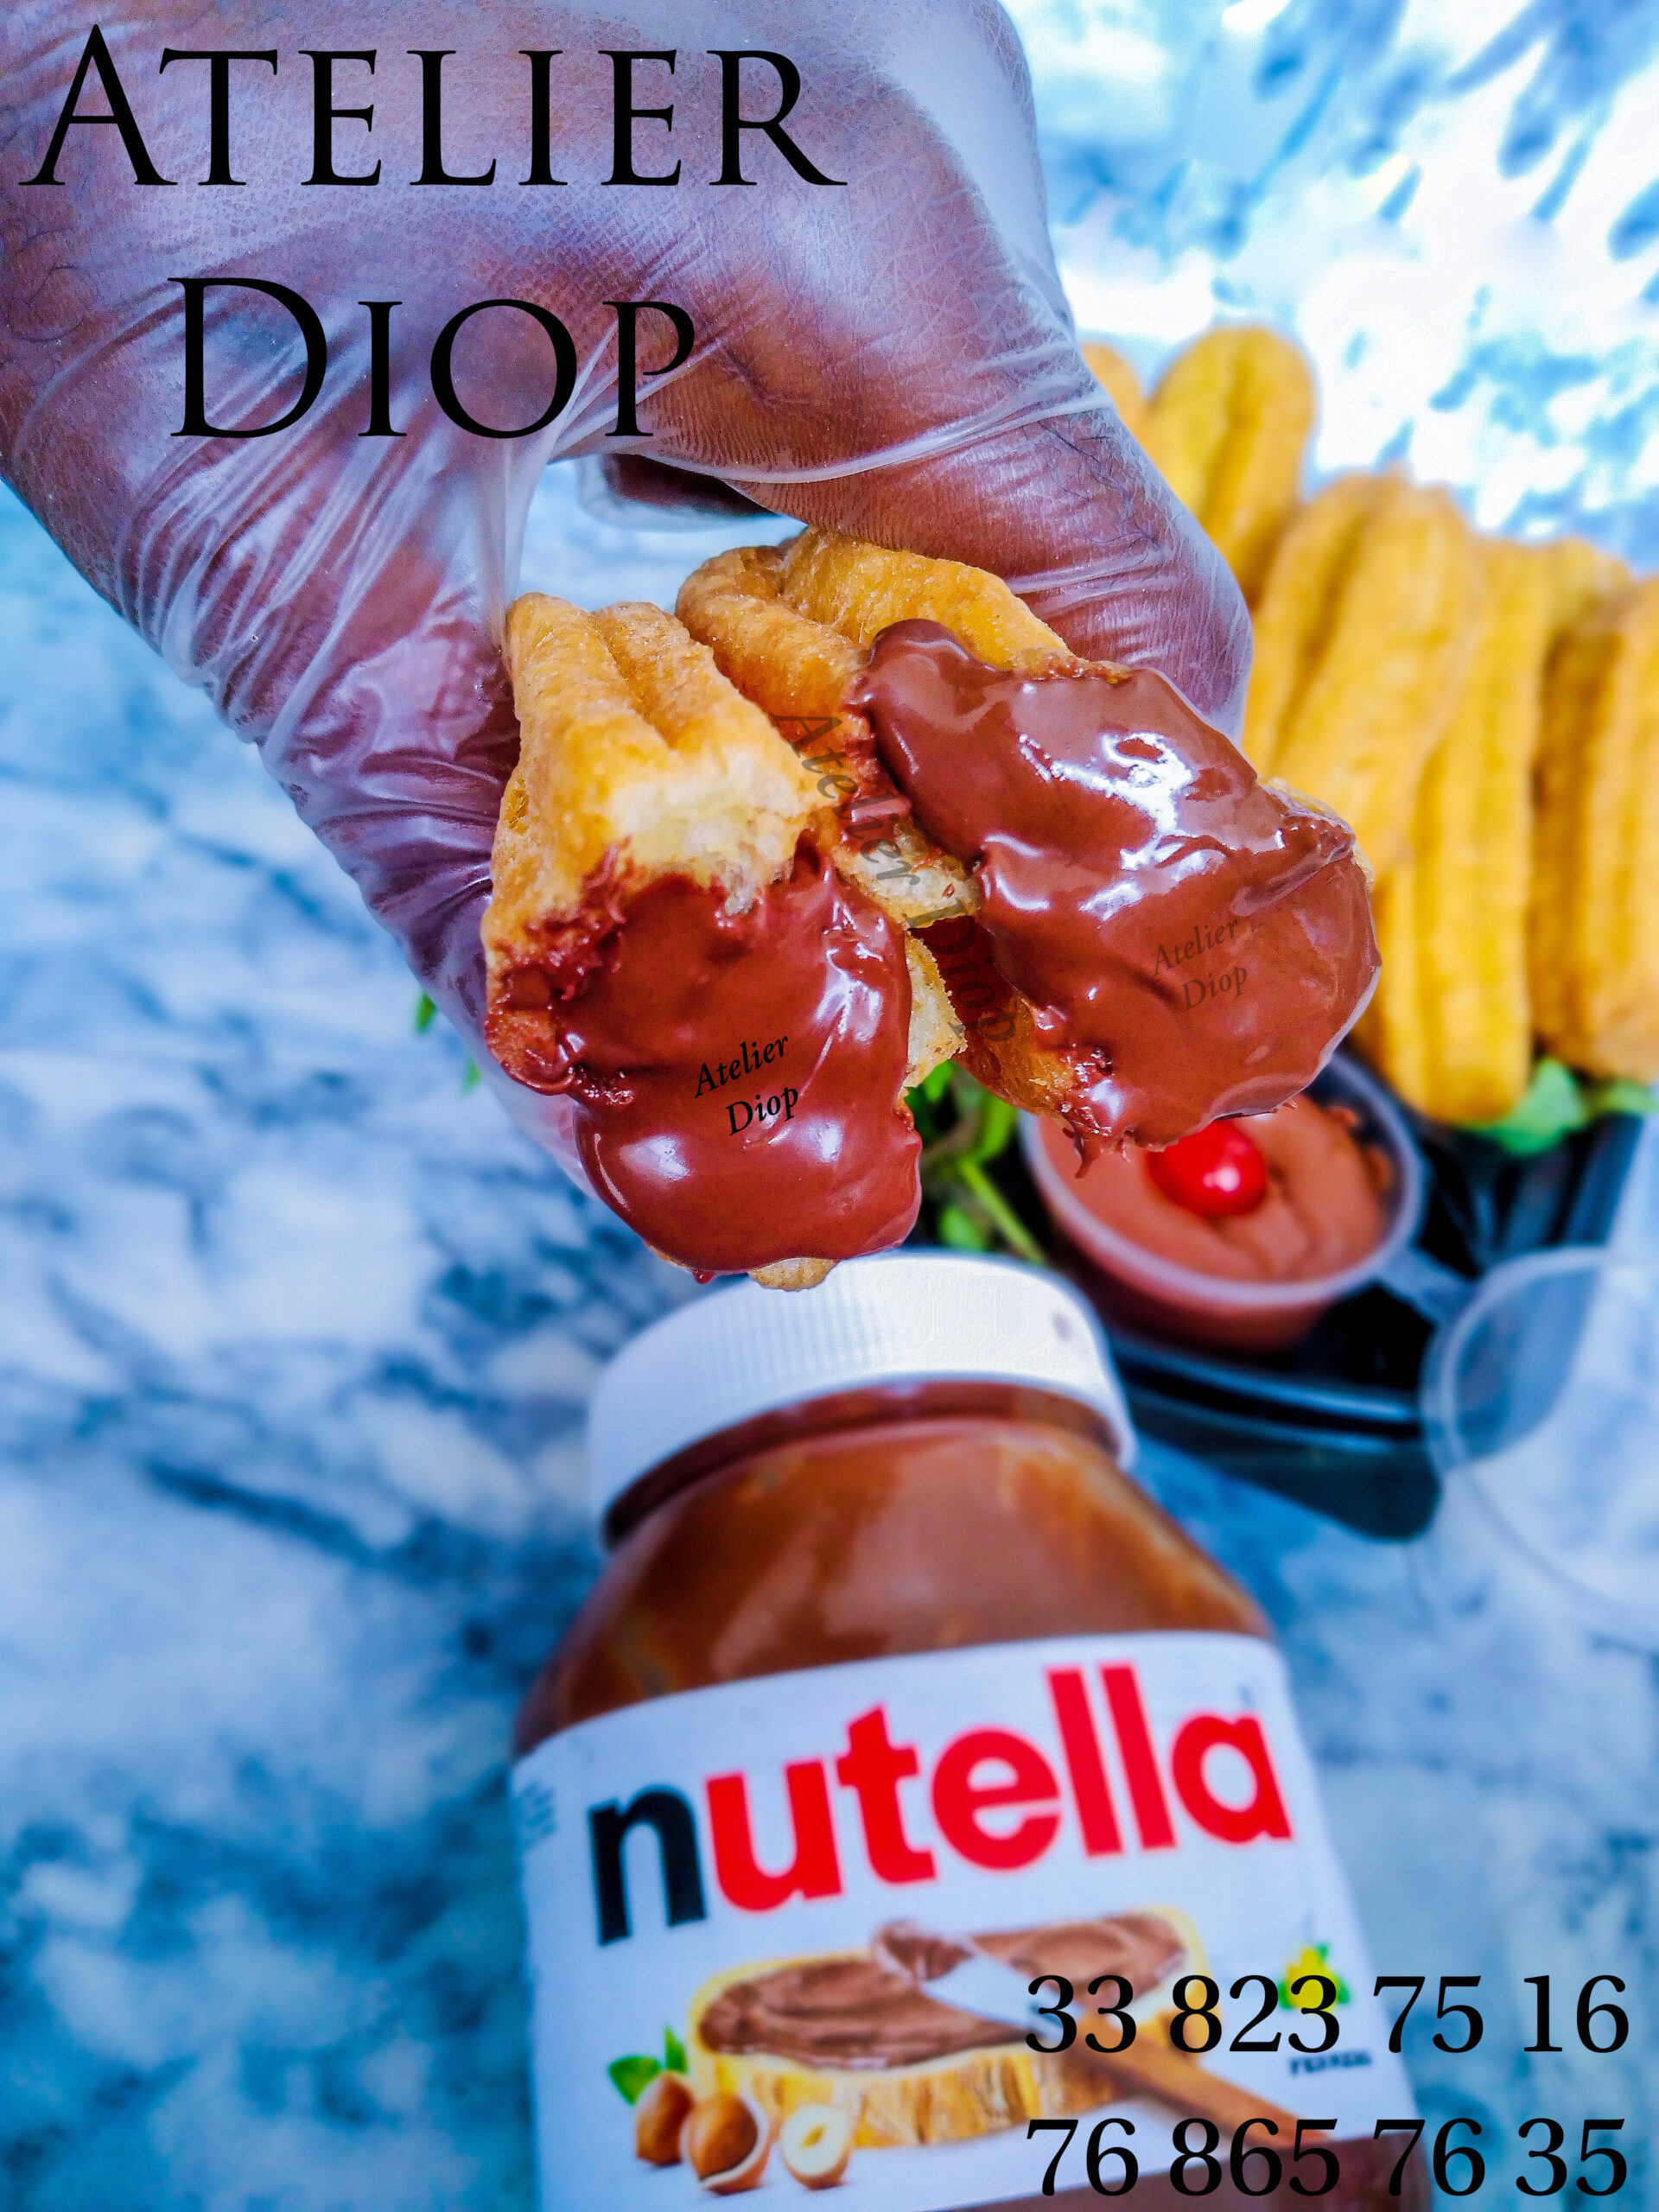 Nutella Diop Churros xxl – Atelier